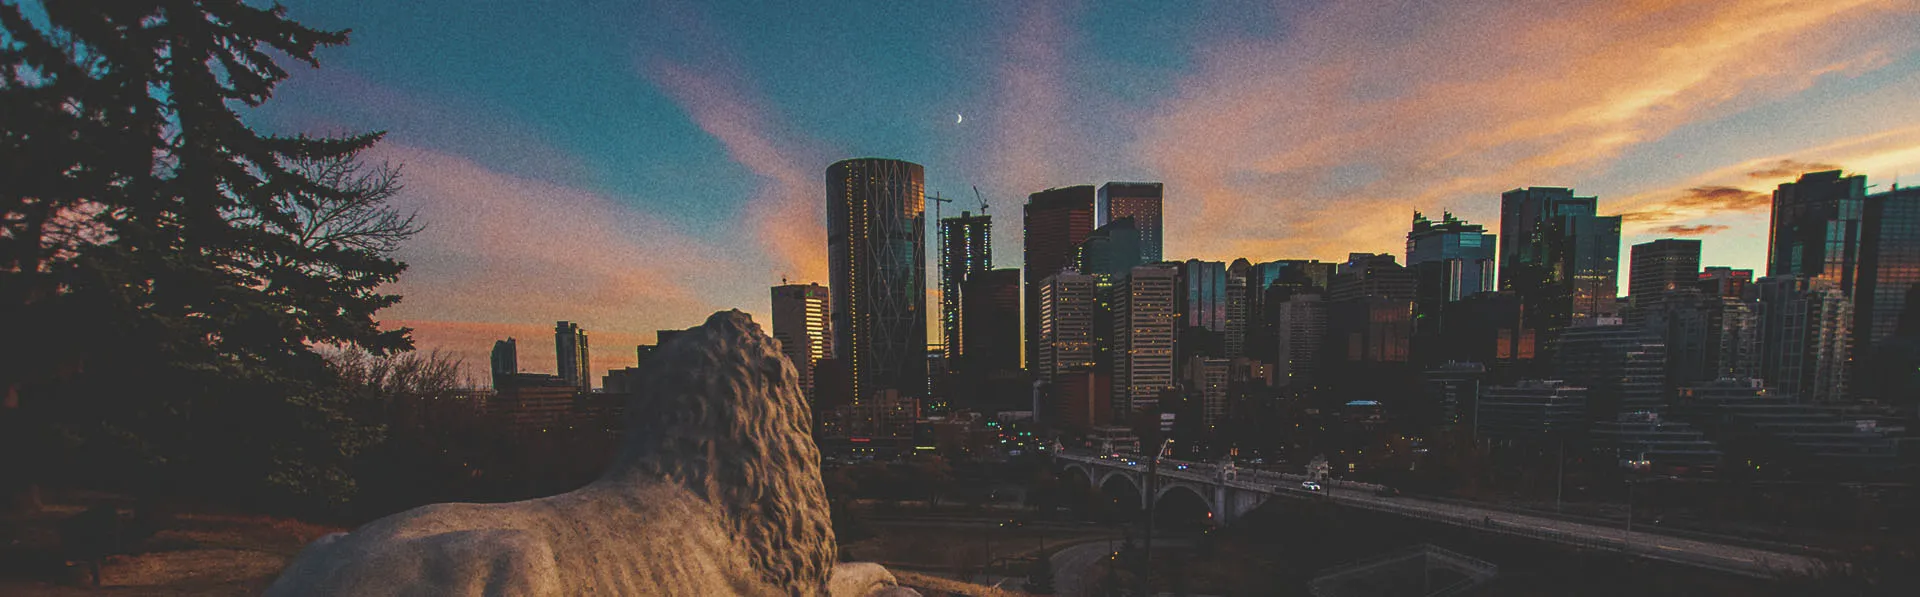 Calgary skyline at sunset